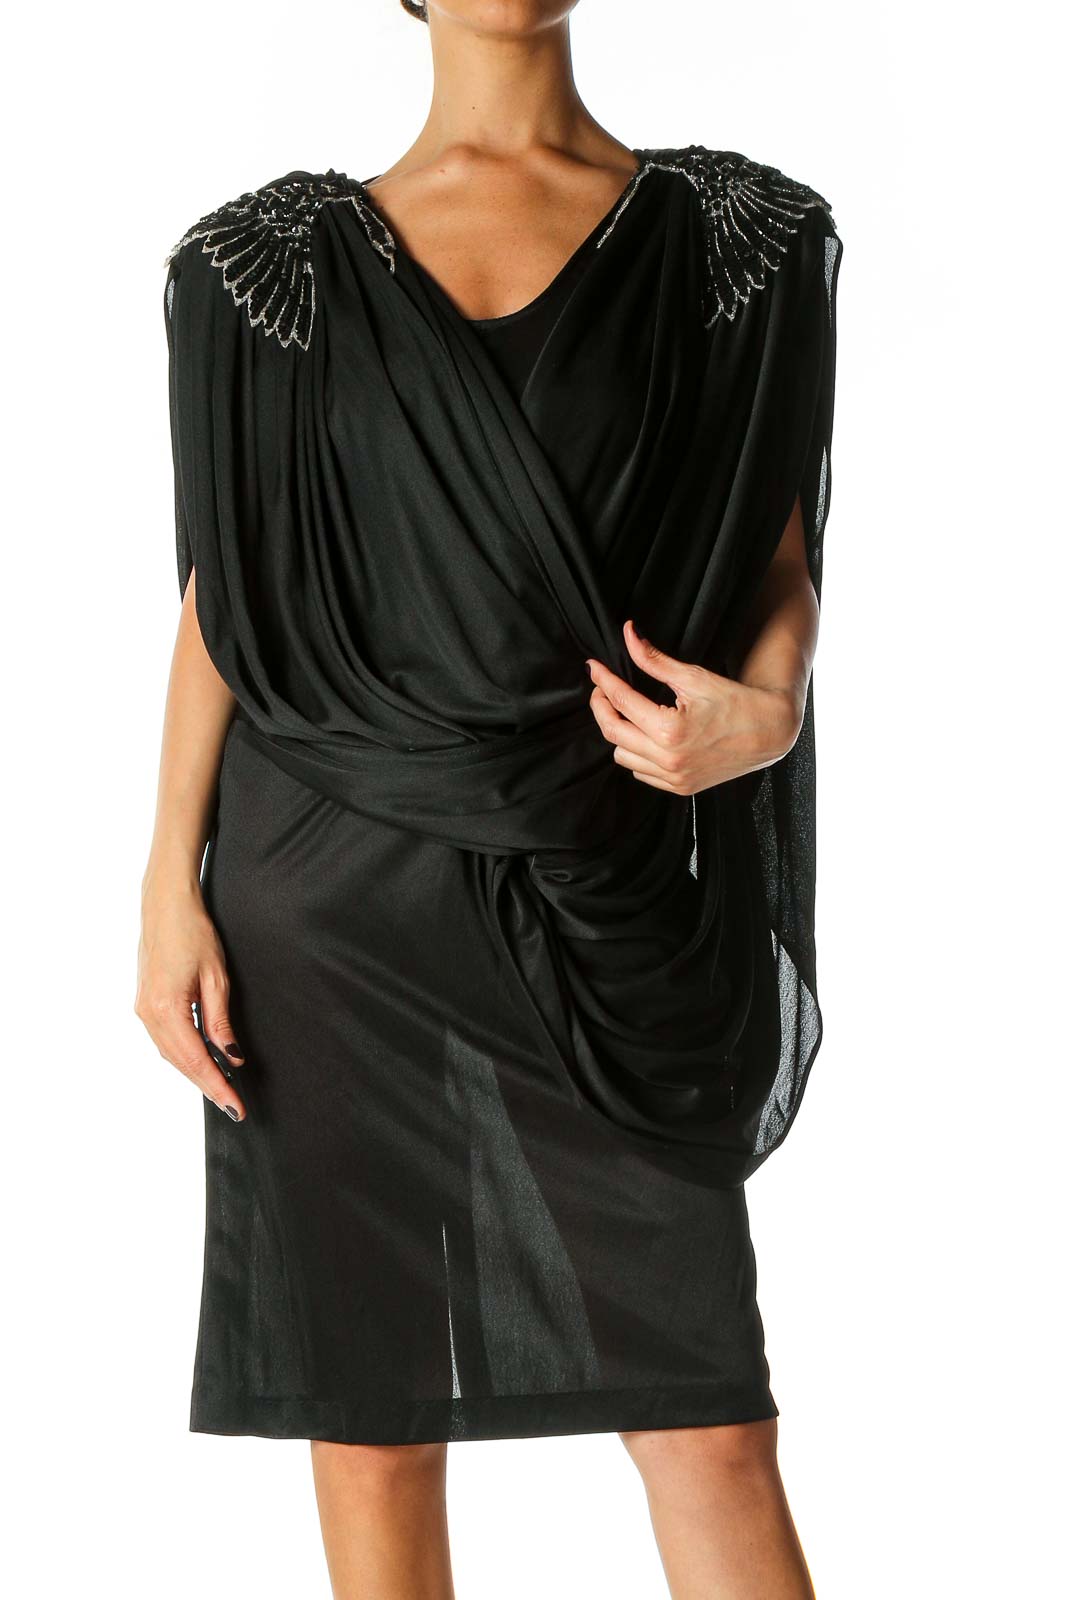 Black Solid Fit & Flare Dress Front